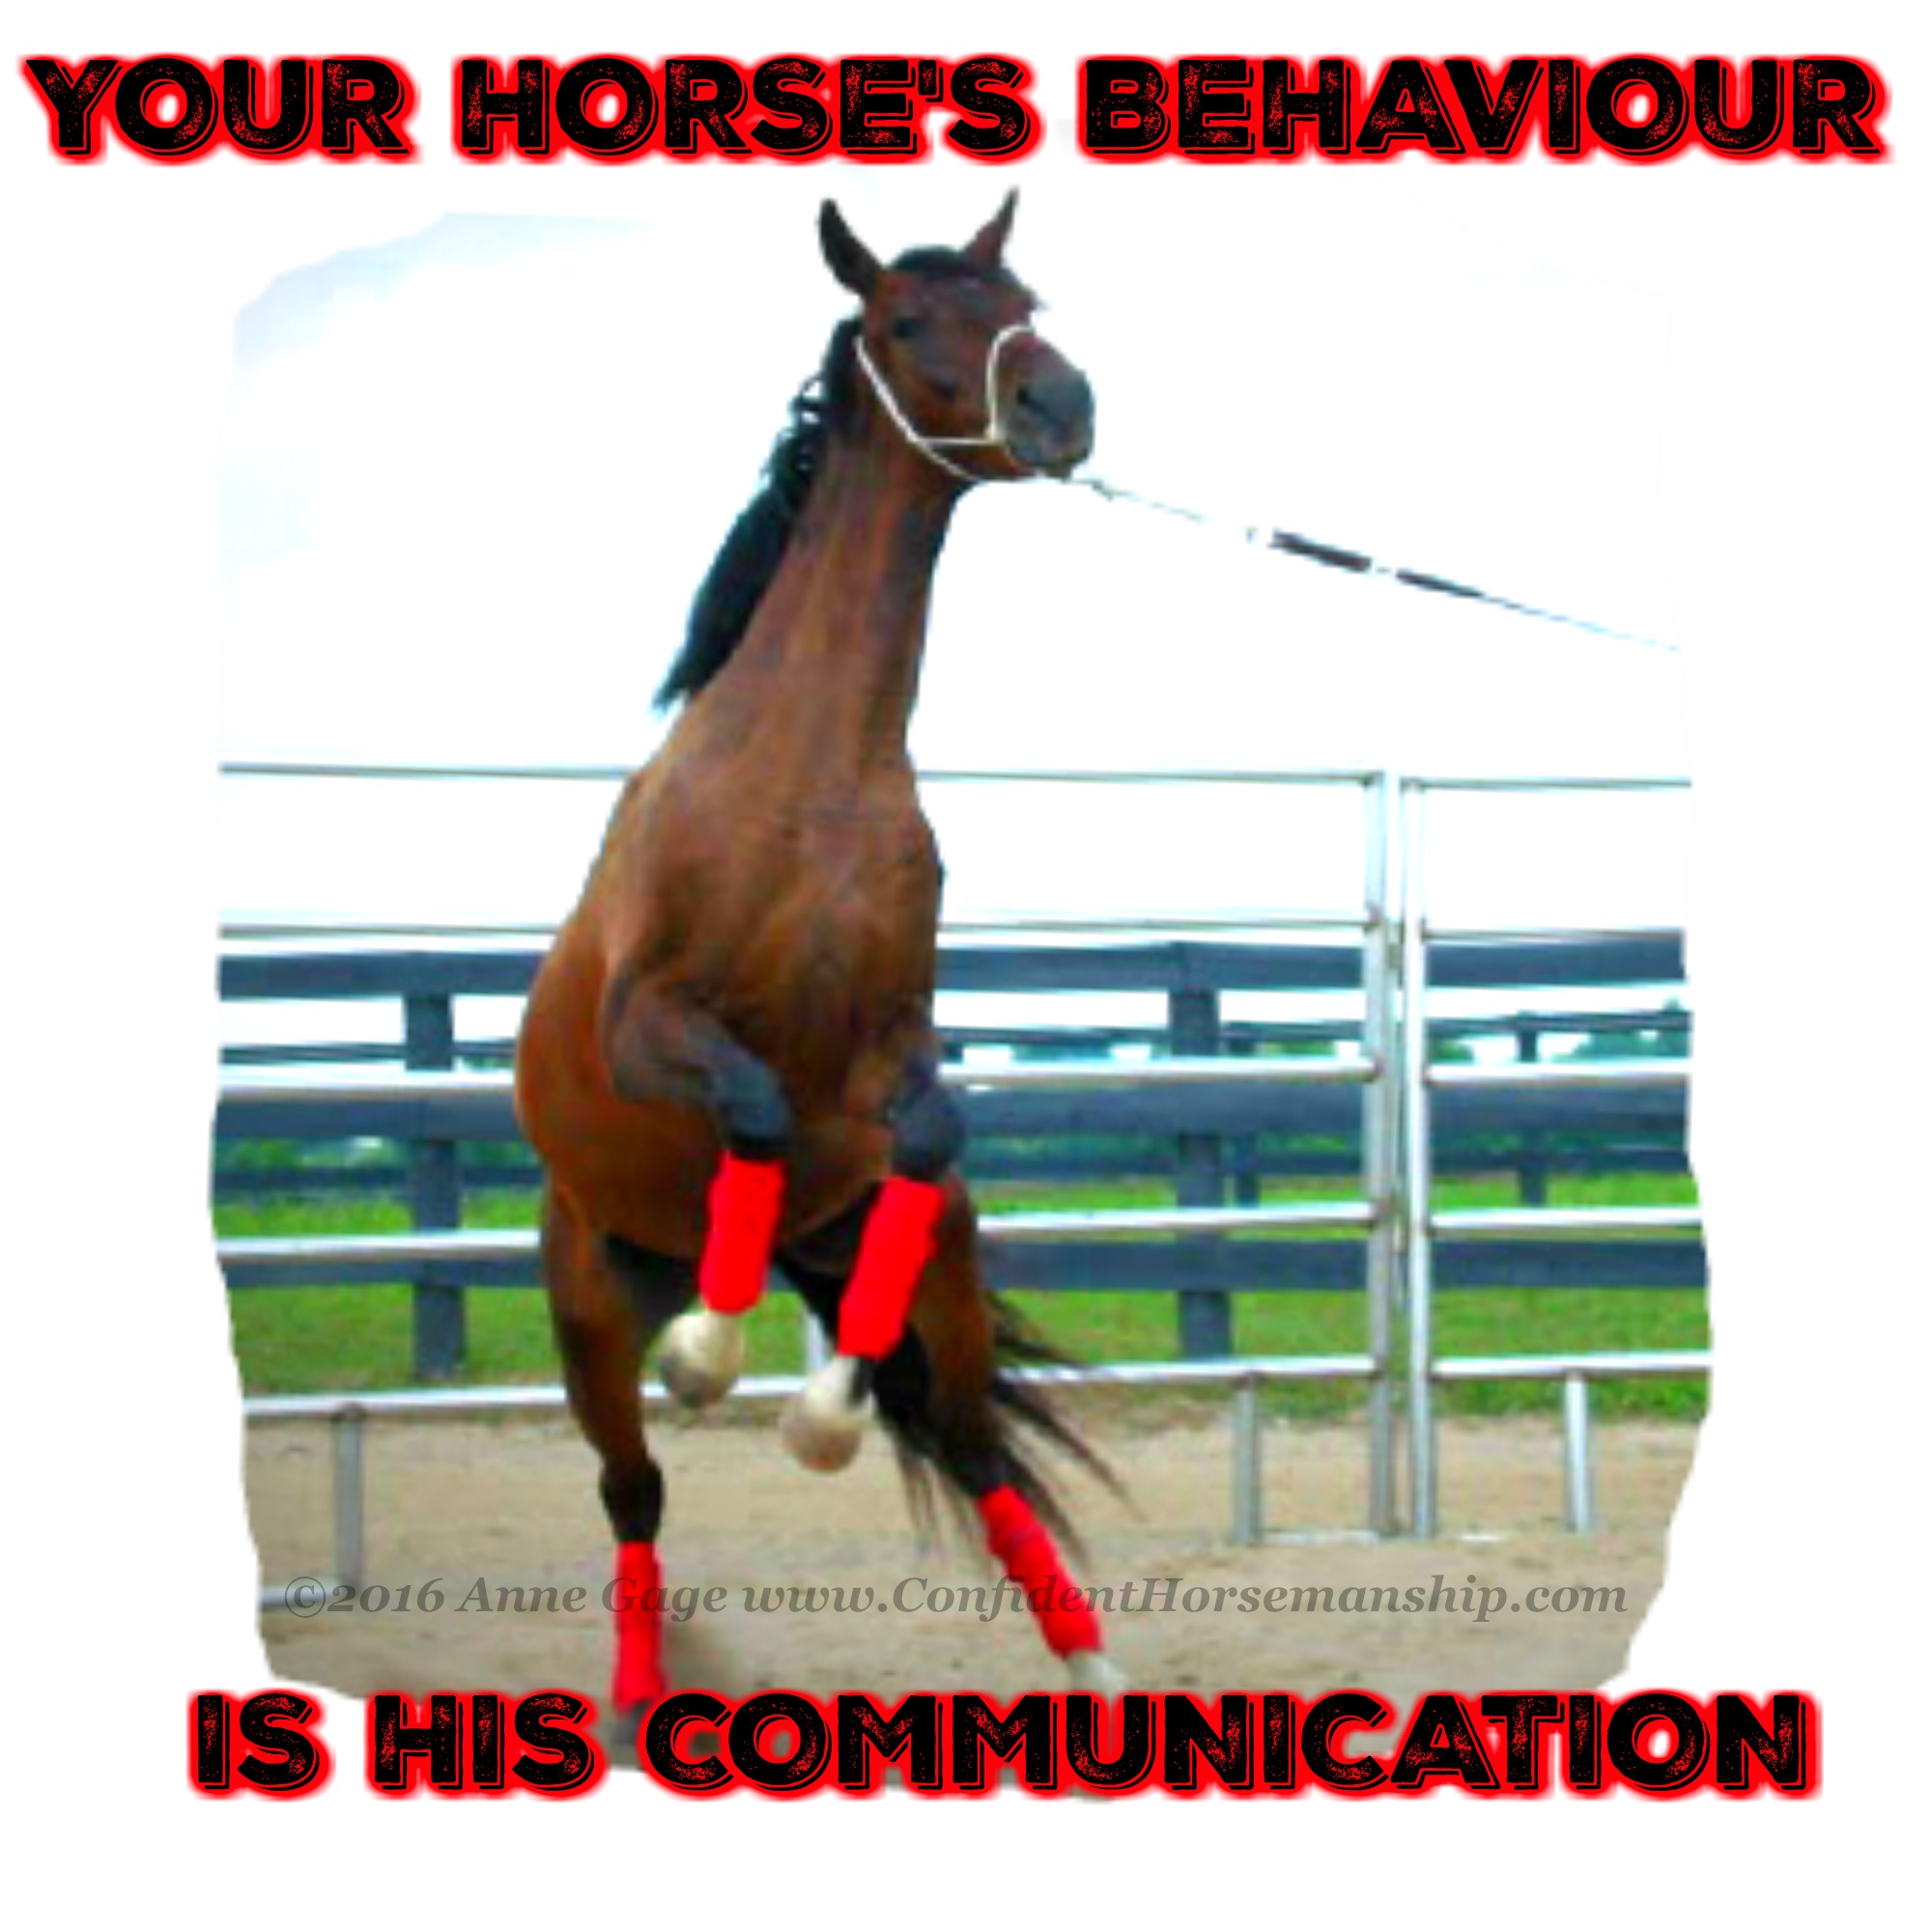 Your horse's behaviour is his communication.